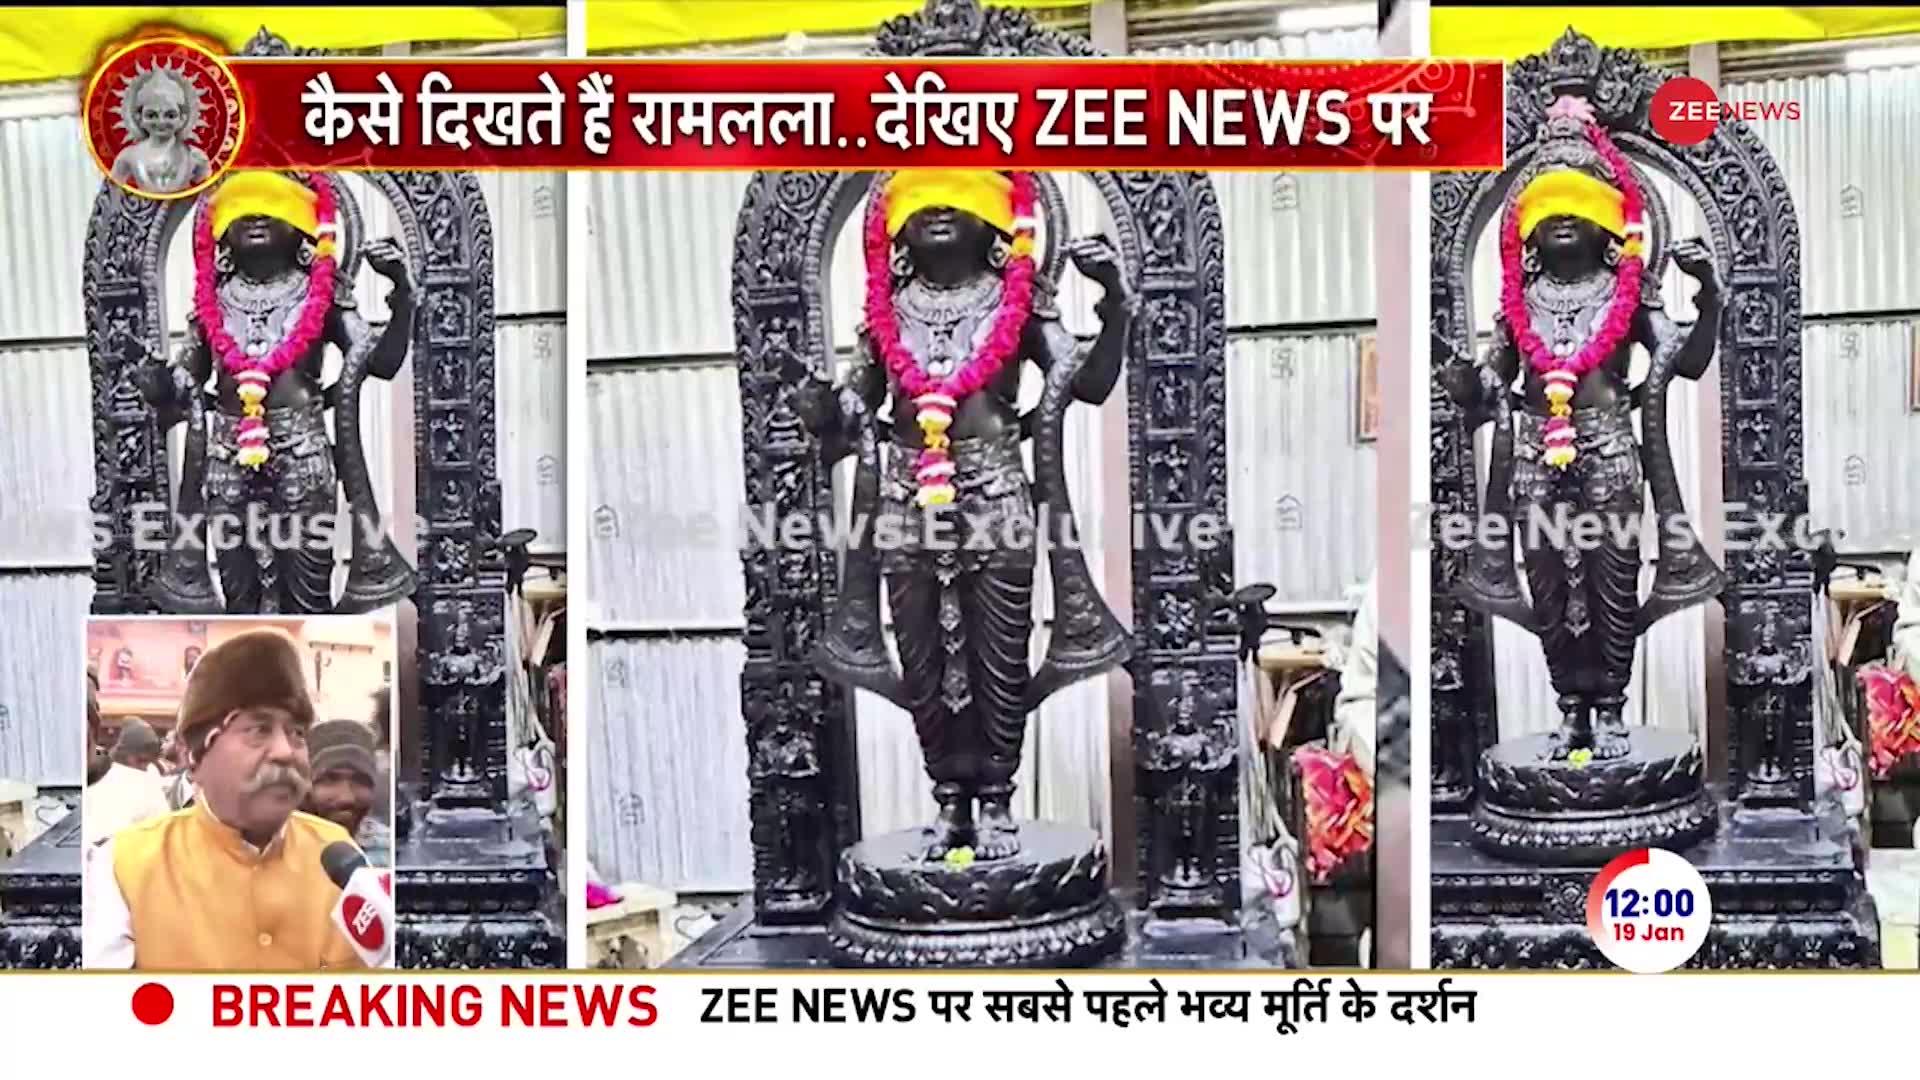 Ayodhya Ram Mandir: भव्य मंदिर तैयार...3 दिन का इंतजार